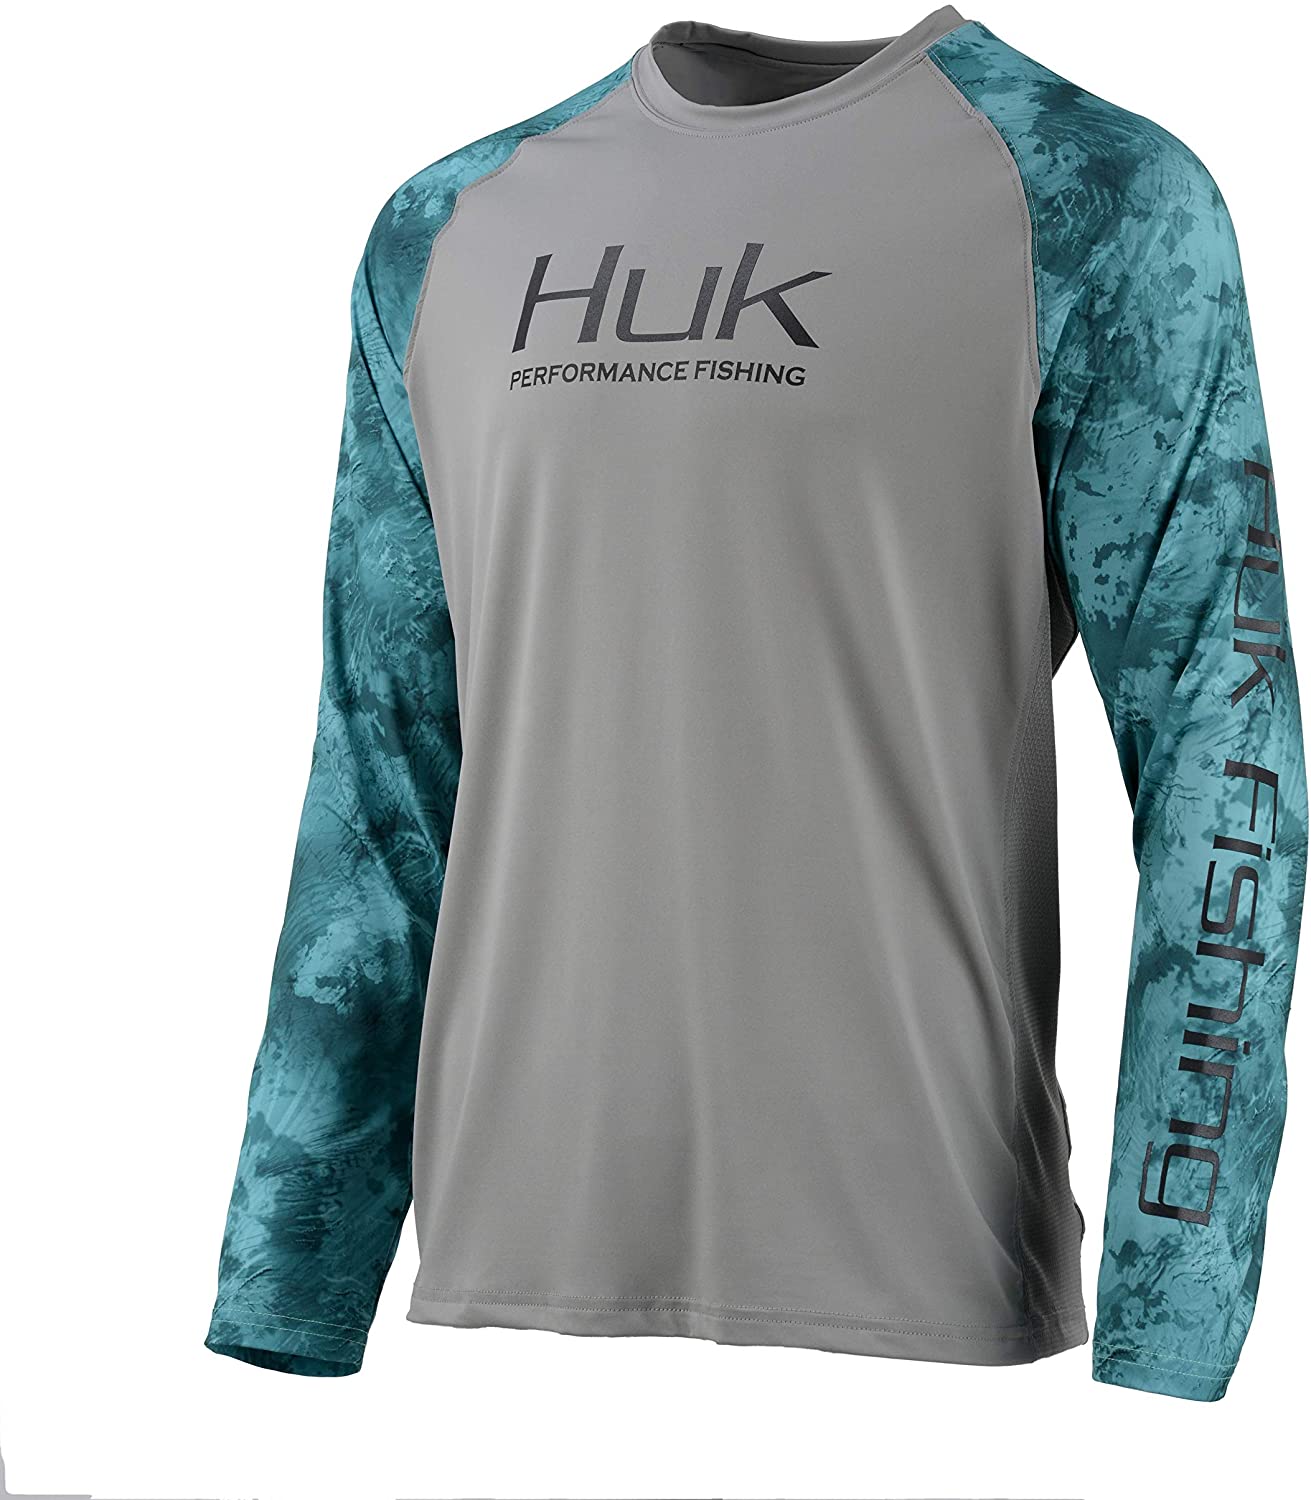 Huk Performance Fishing Men's Long Sleeve Pocket Tee Shirt